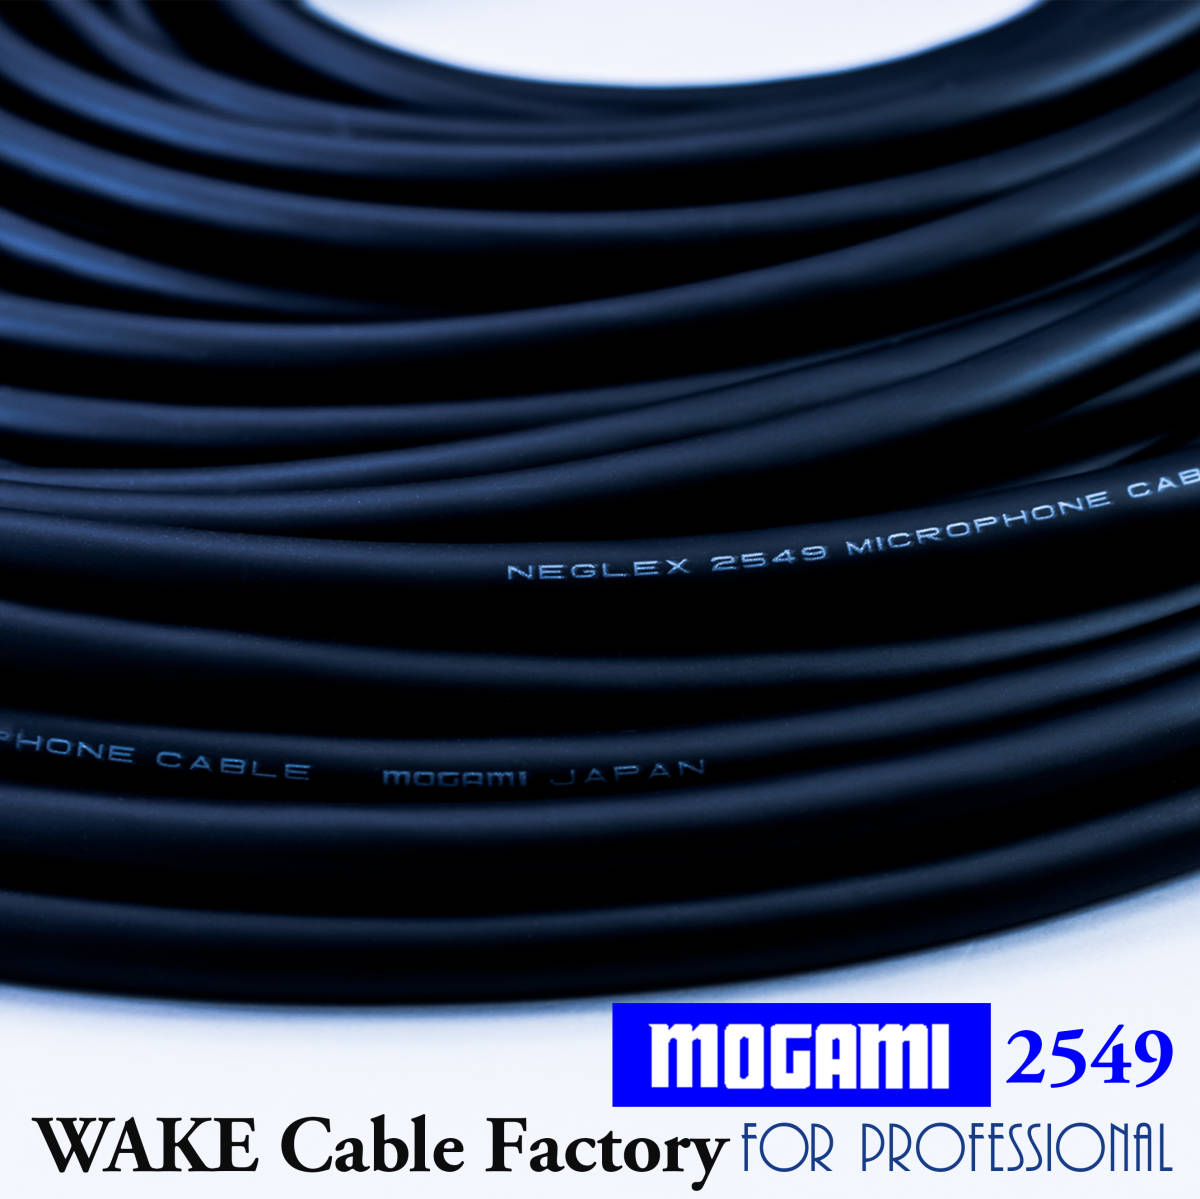  sound. balance eminent!MOGAMI2549*XLR cable 75cm stereo pair *NEUTRIK silver plating / domestic production Moga mi/ safety standard!